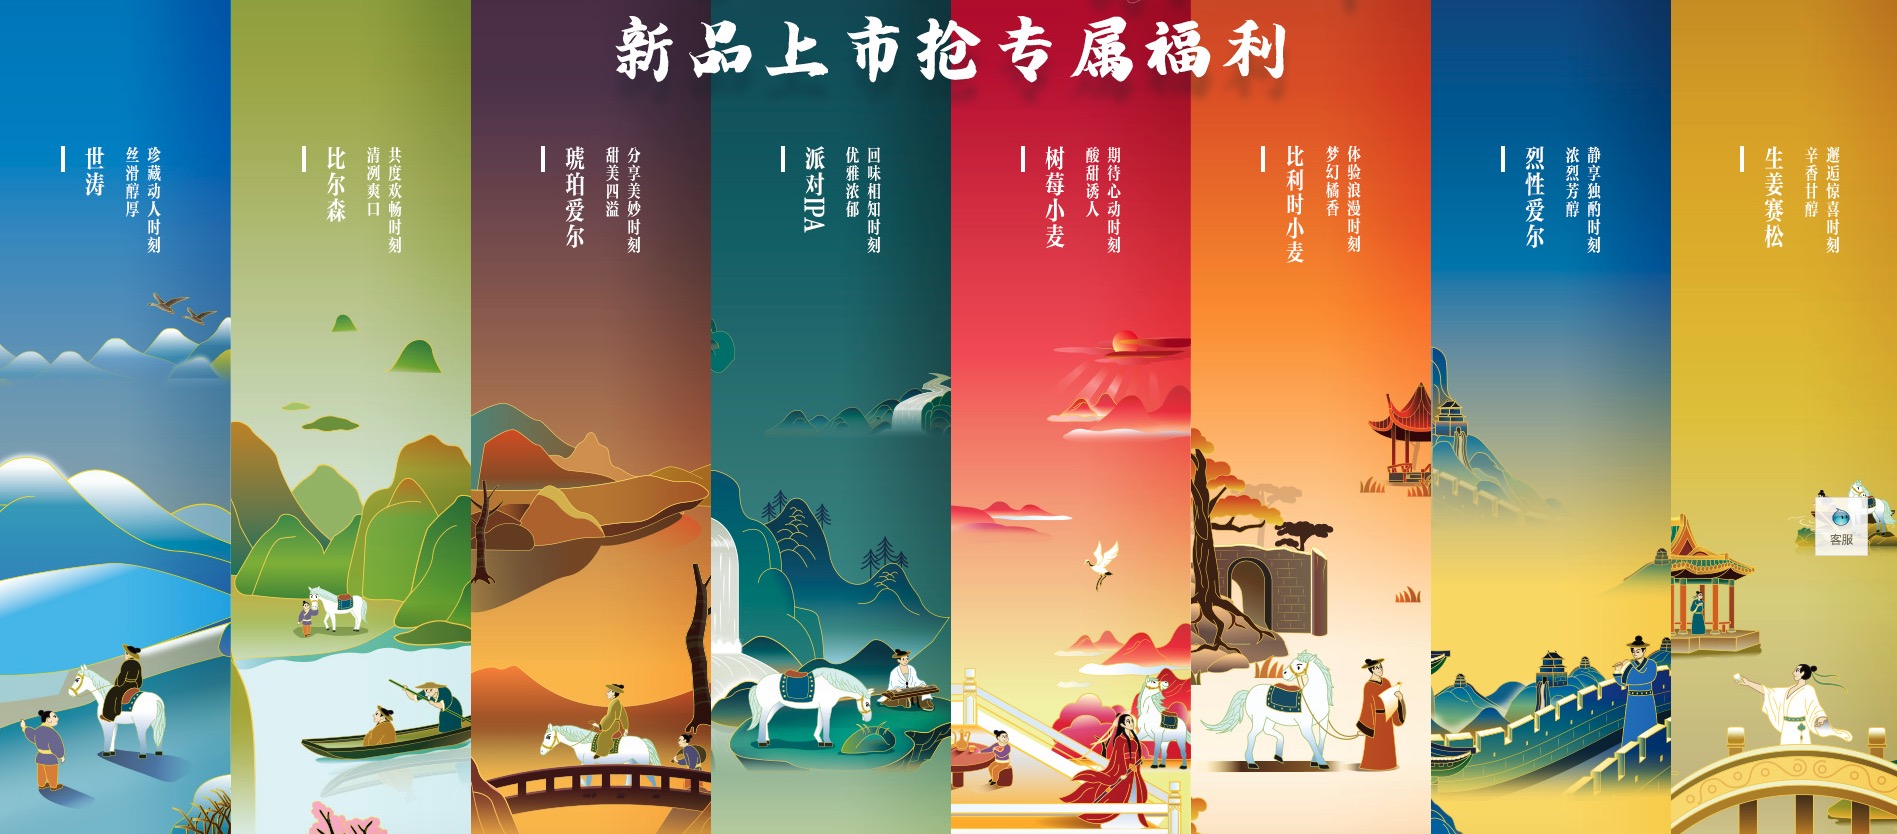 Yanjing Beer launched a new series of Beijing scenery beer